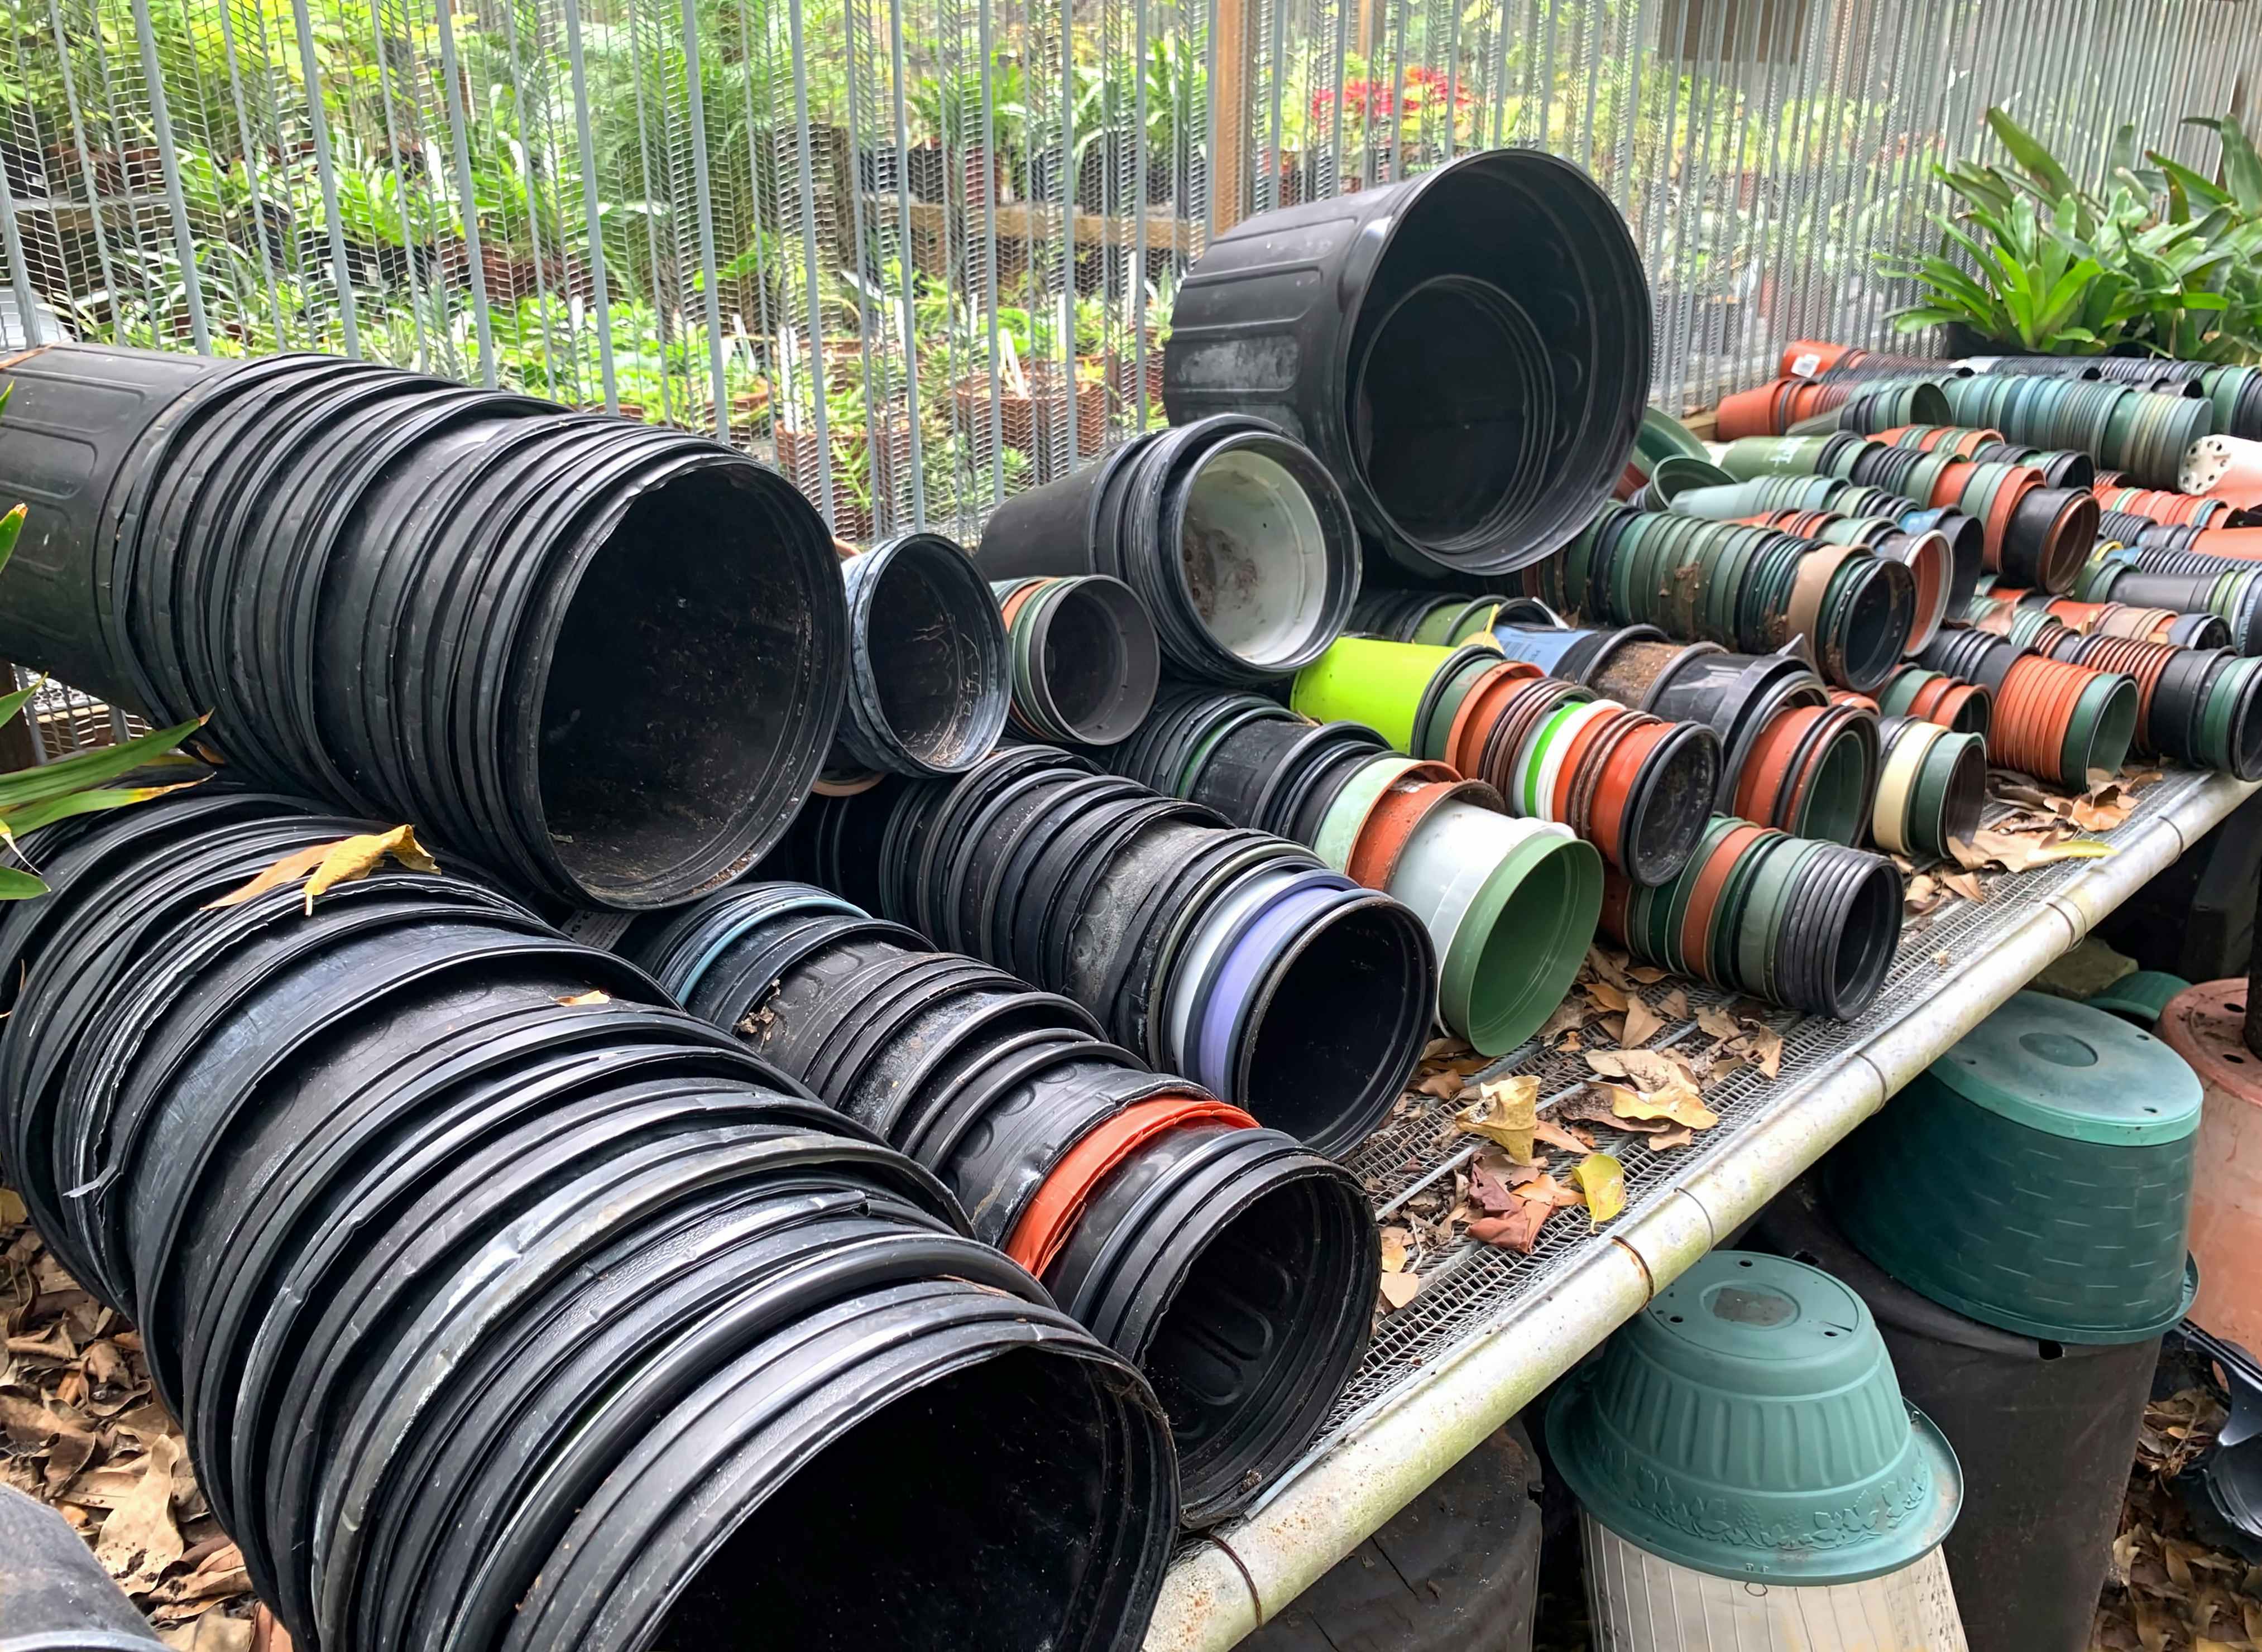 Used plastic garden pots in an outdoor garden center or store.